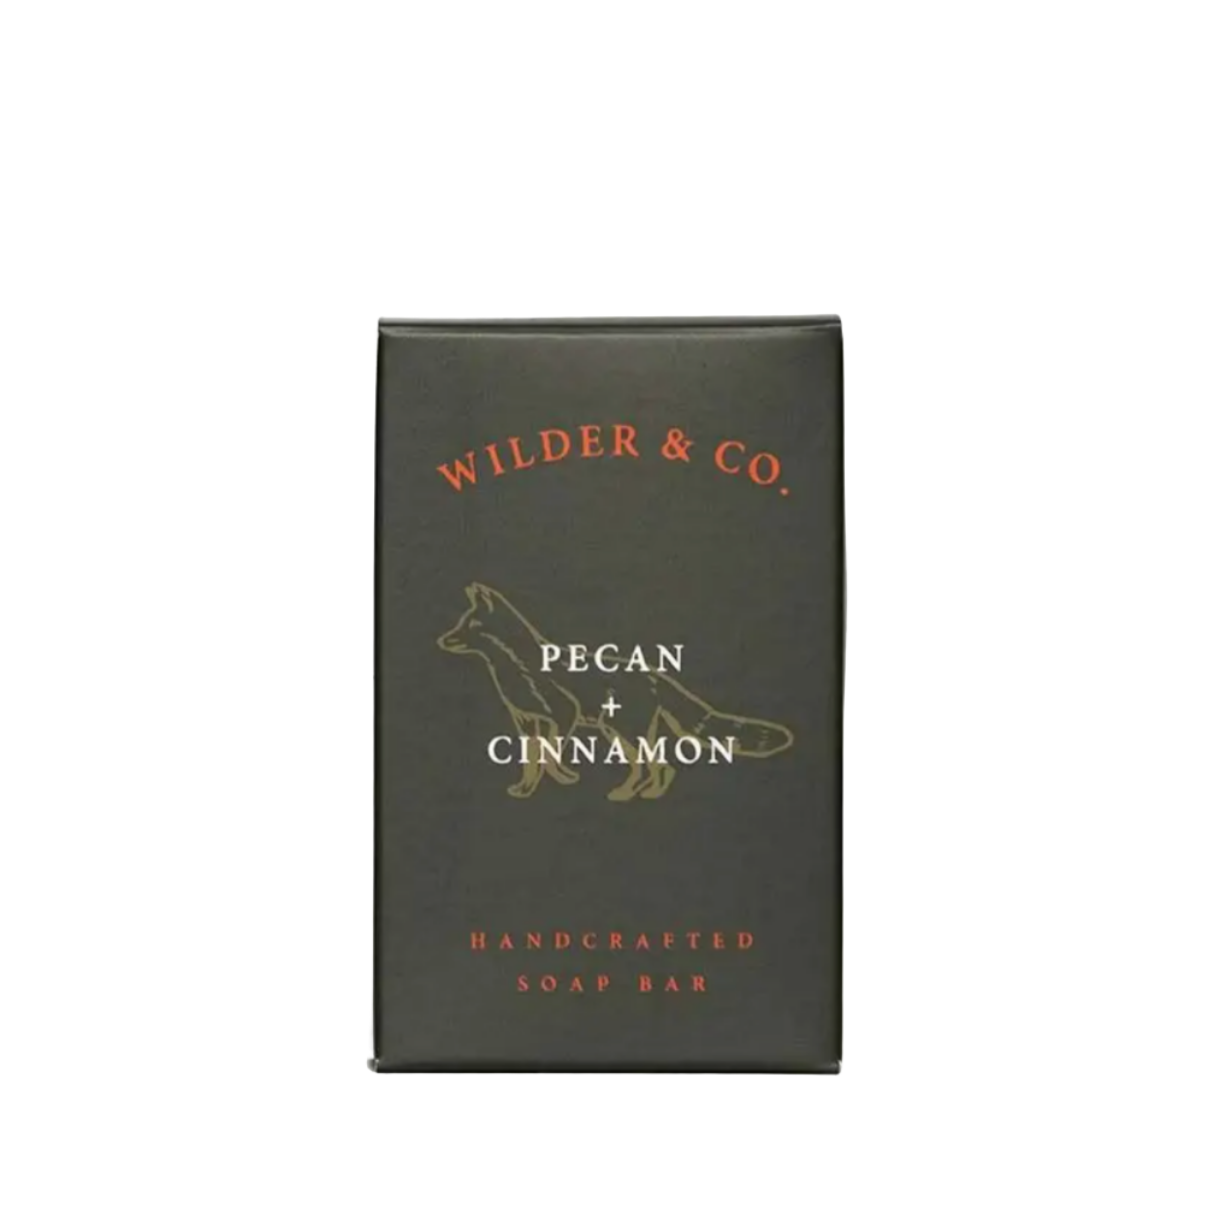 Peacan & Cinnamon Soap Bar